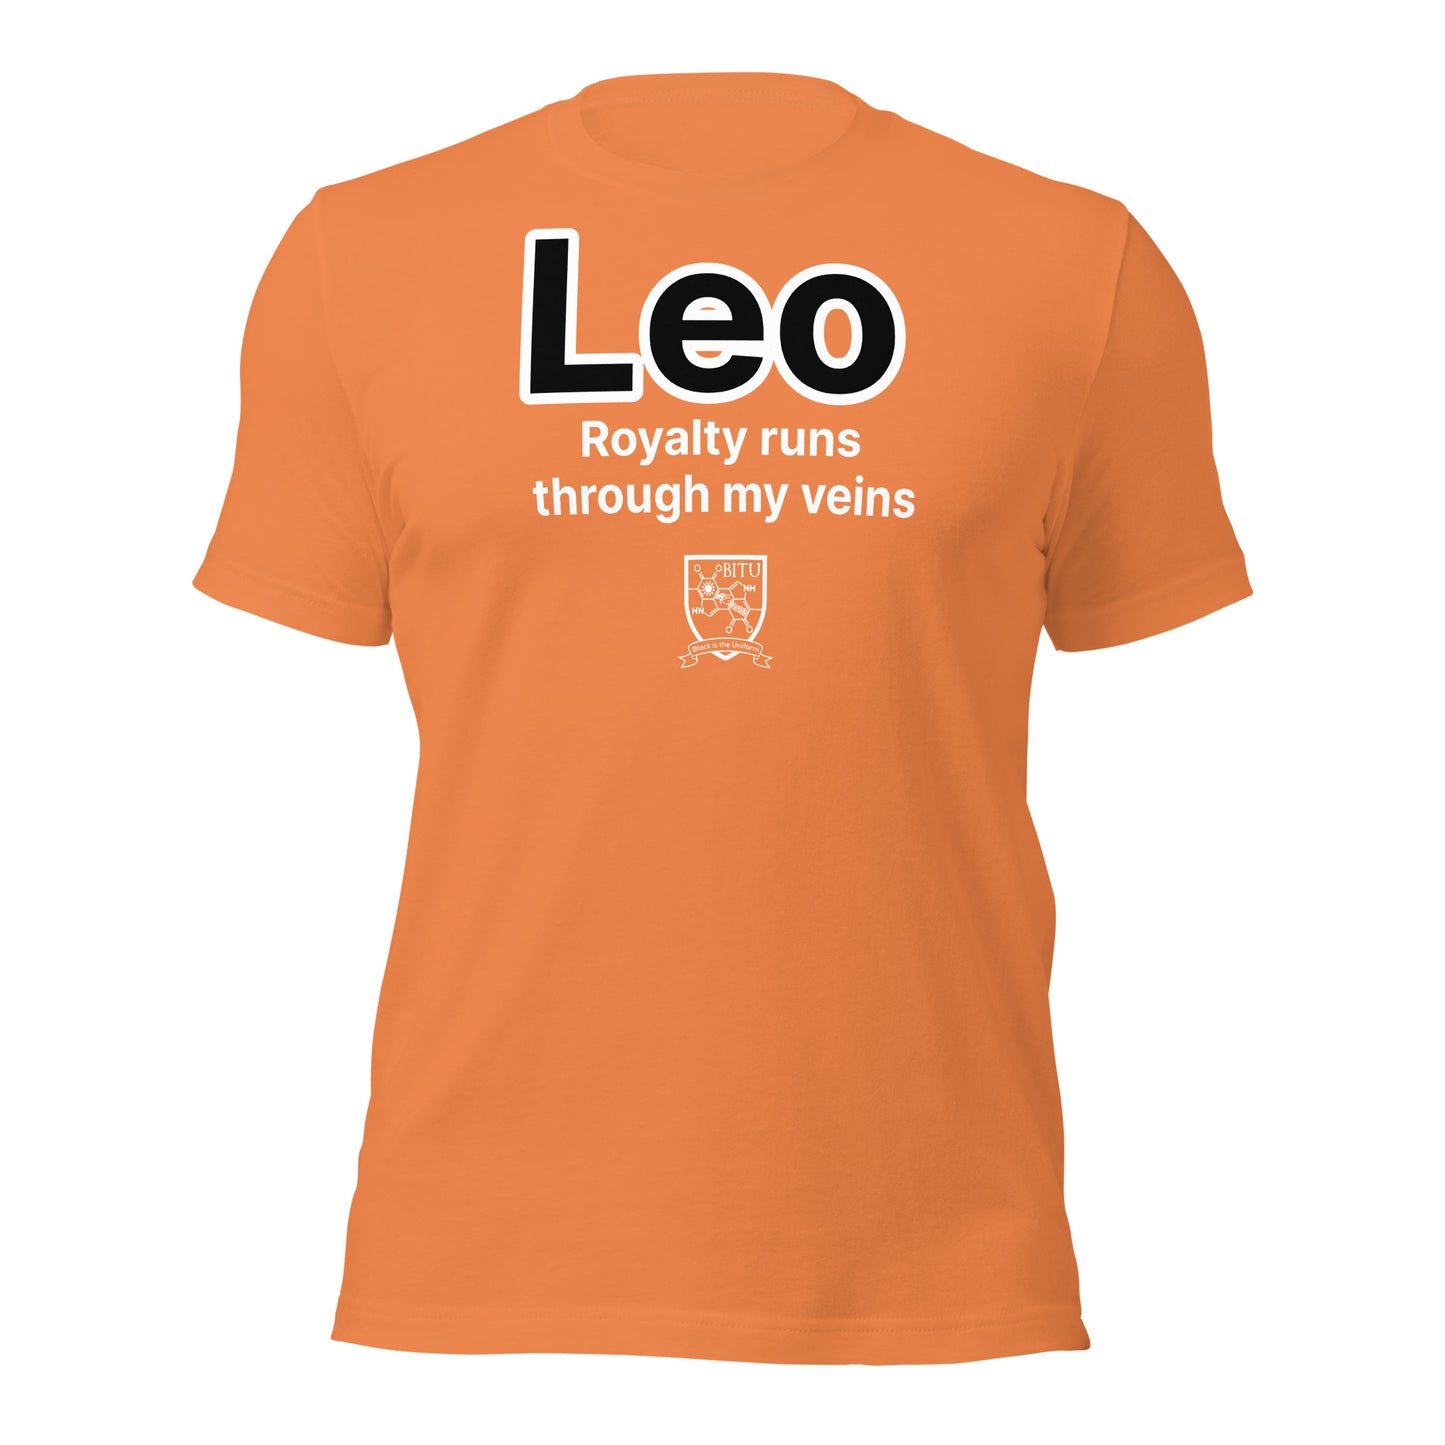 Leo - Royalty runs through my veins